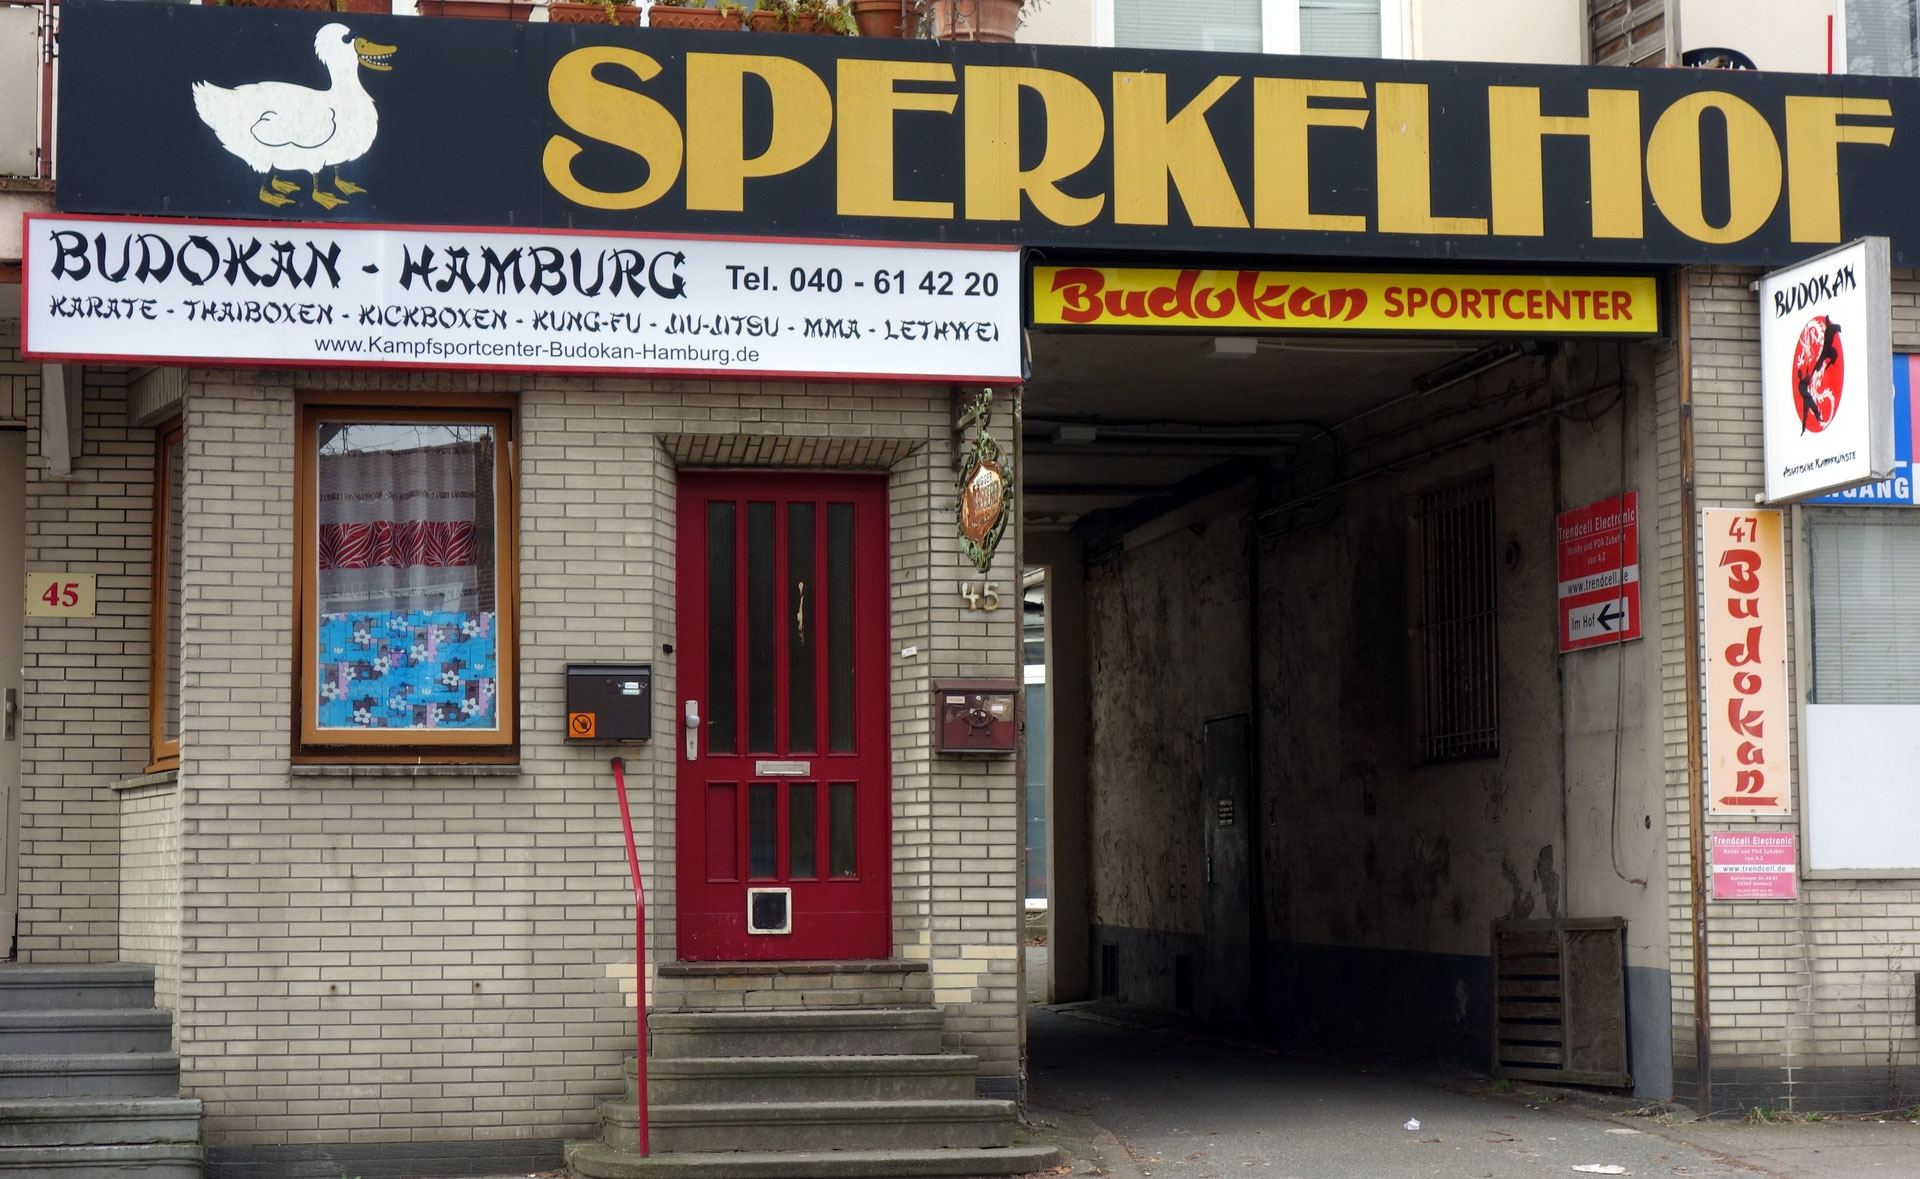 (c) Kampfsportcenter-budokan-hamburg.de